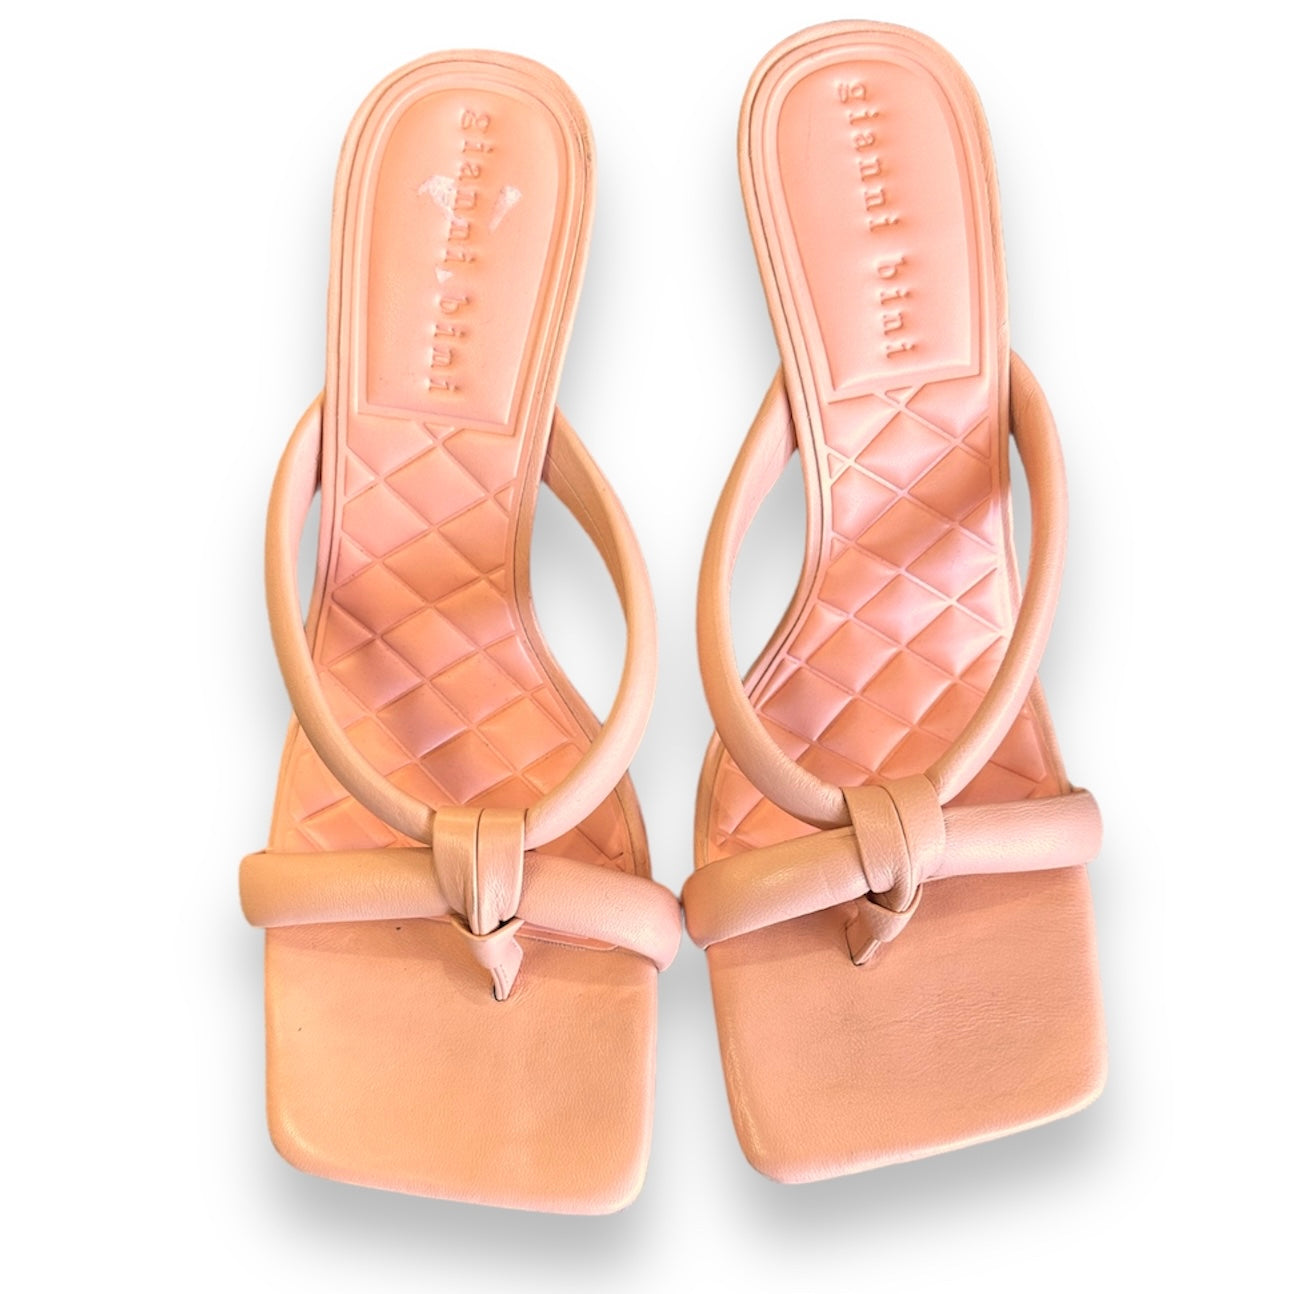 Peach Shoes Heels Stiletto Gianni Bini, Size 8